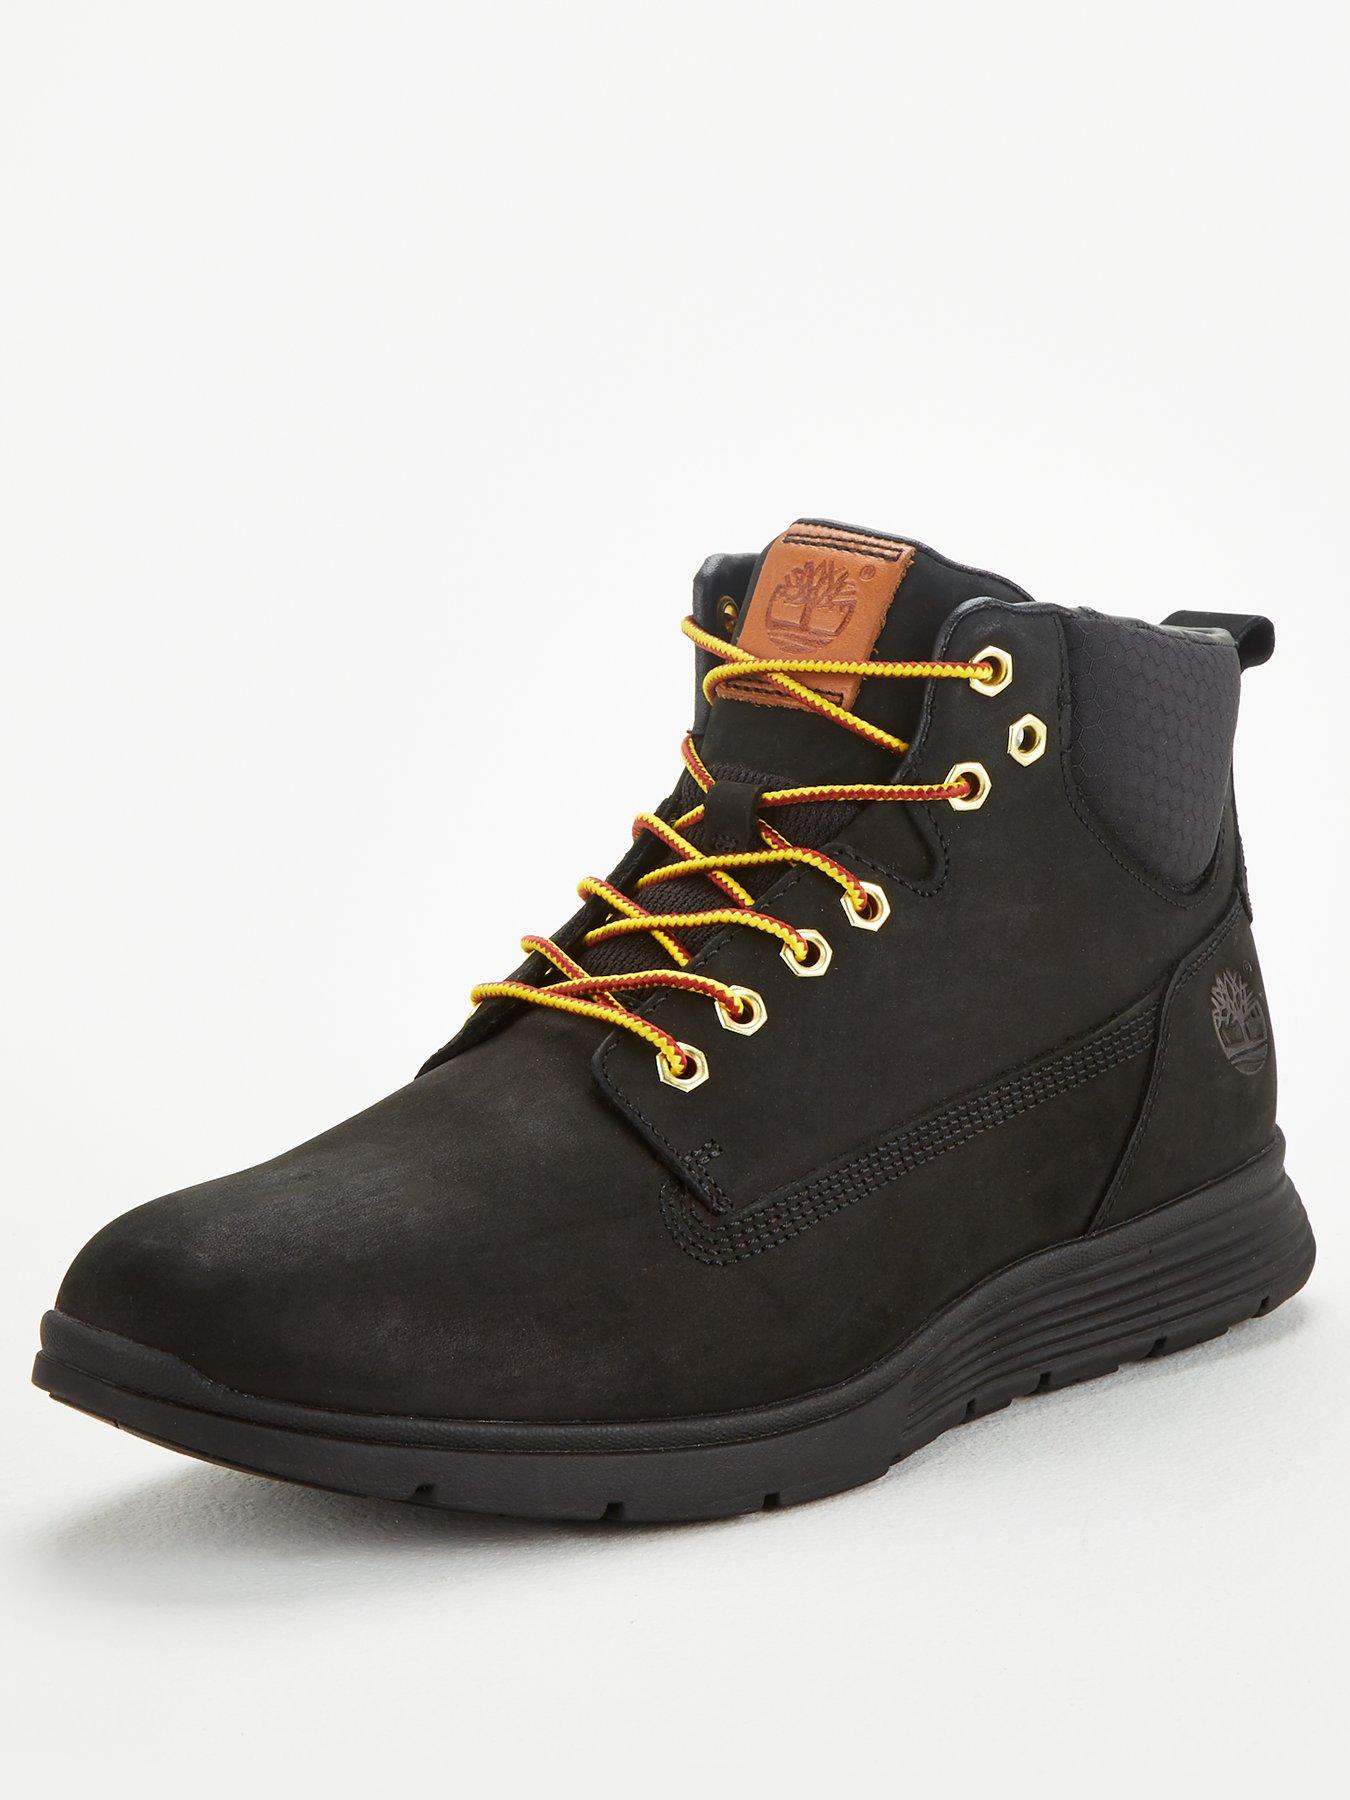 Timberland Killington Leather Chukka Boots - Black | very.co.uk